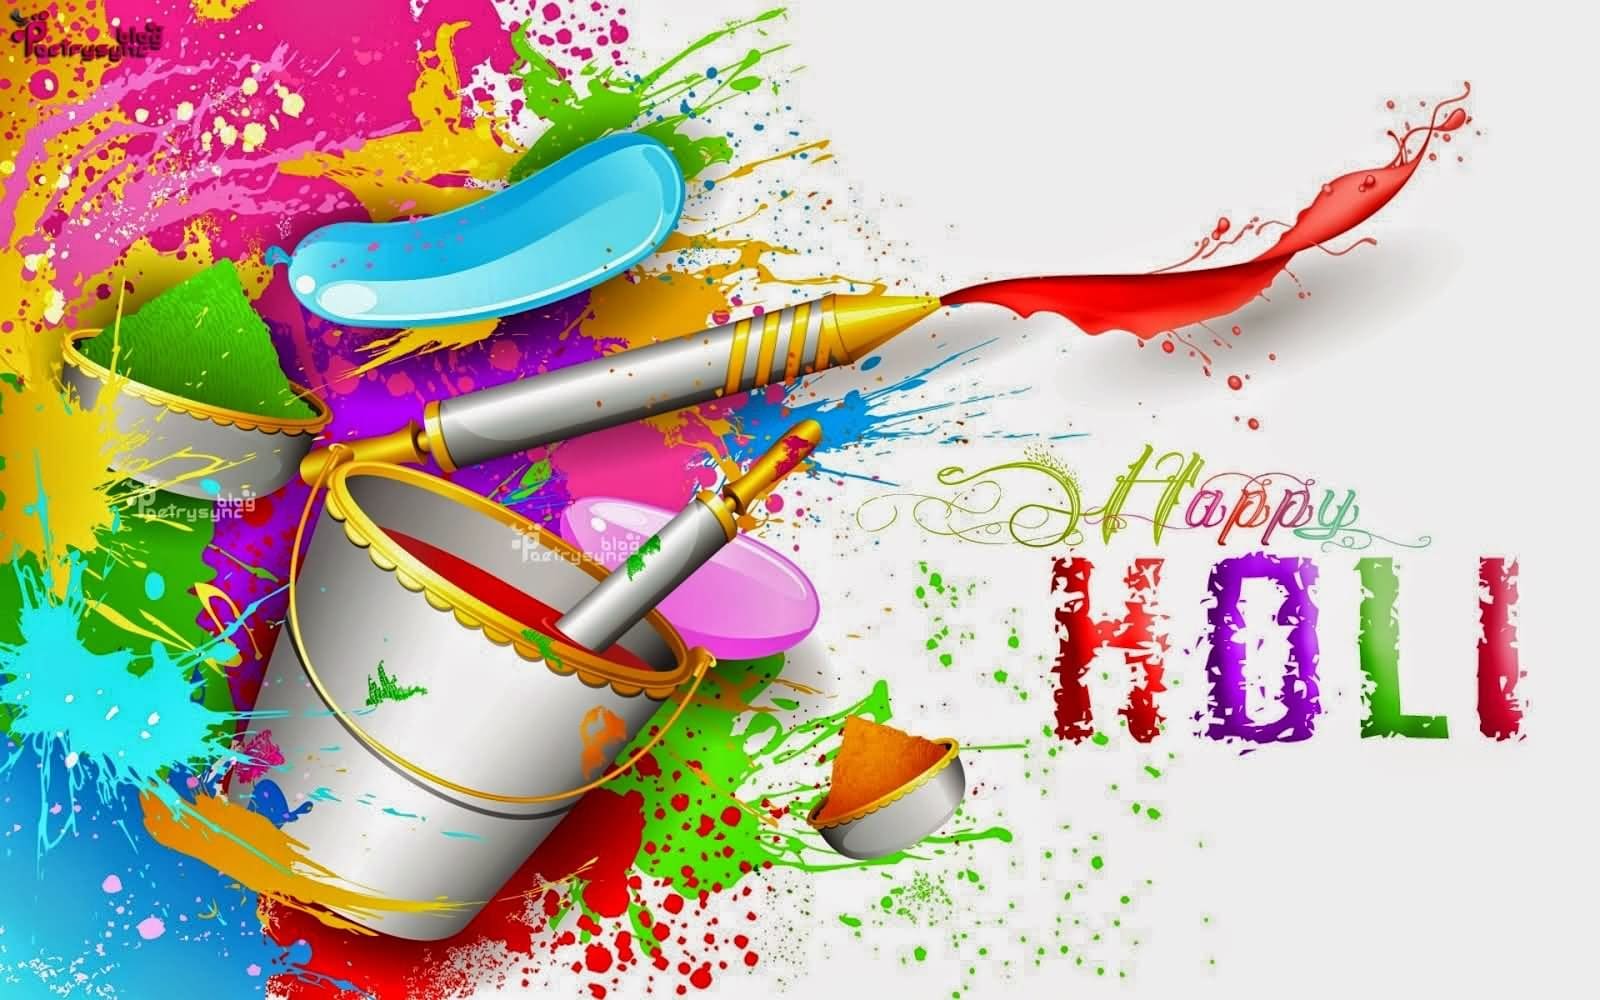 Happy Holi 2021 wishes & Important Dates 